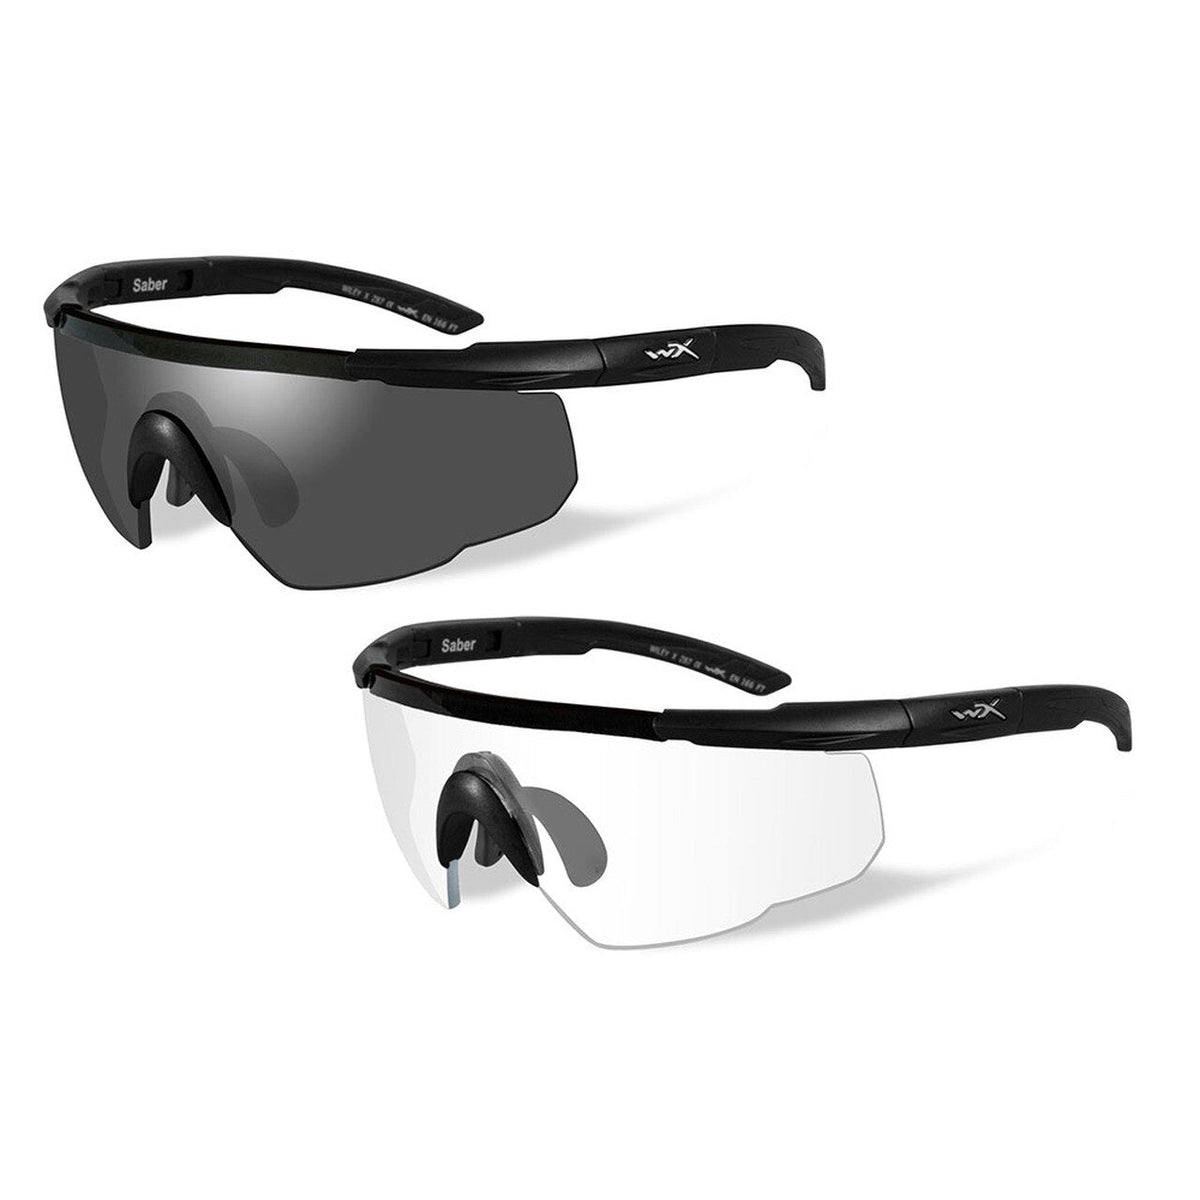 Wiley X Saber Advanced Eyeshield Two Lens Two Matte Black Frames Eyewear Wiley X Tactical Gear Supplier Tactical Distributors Australia